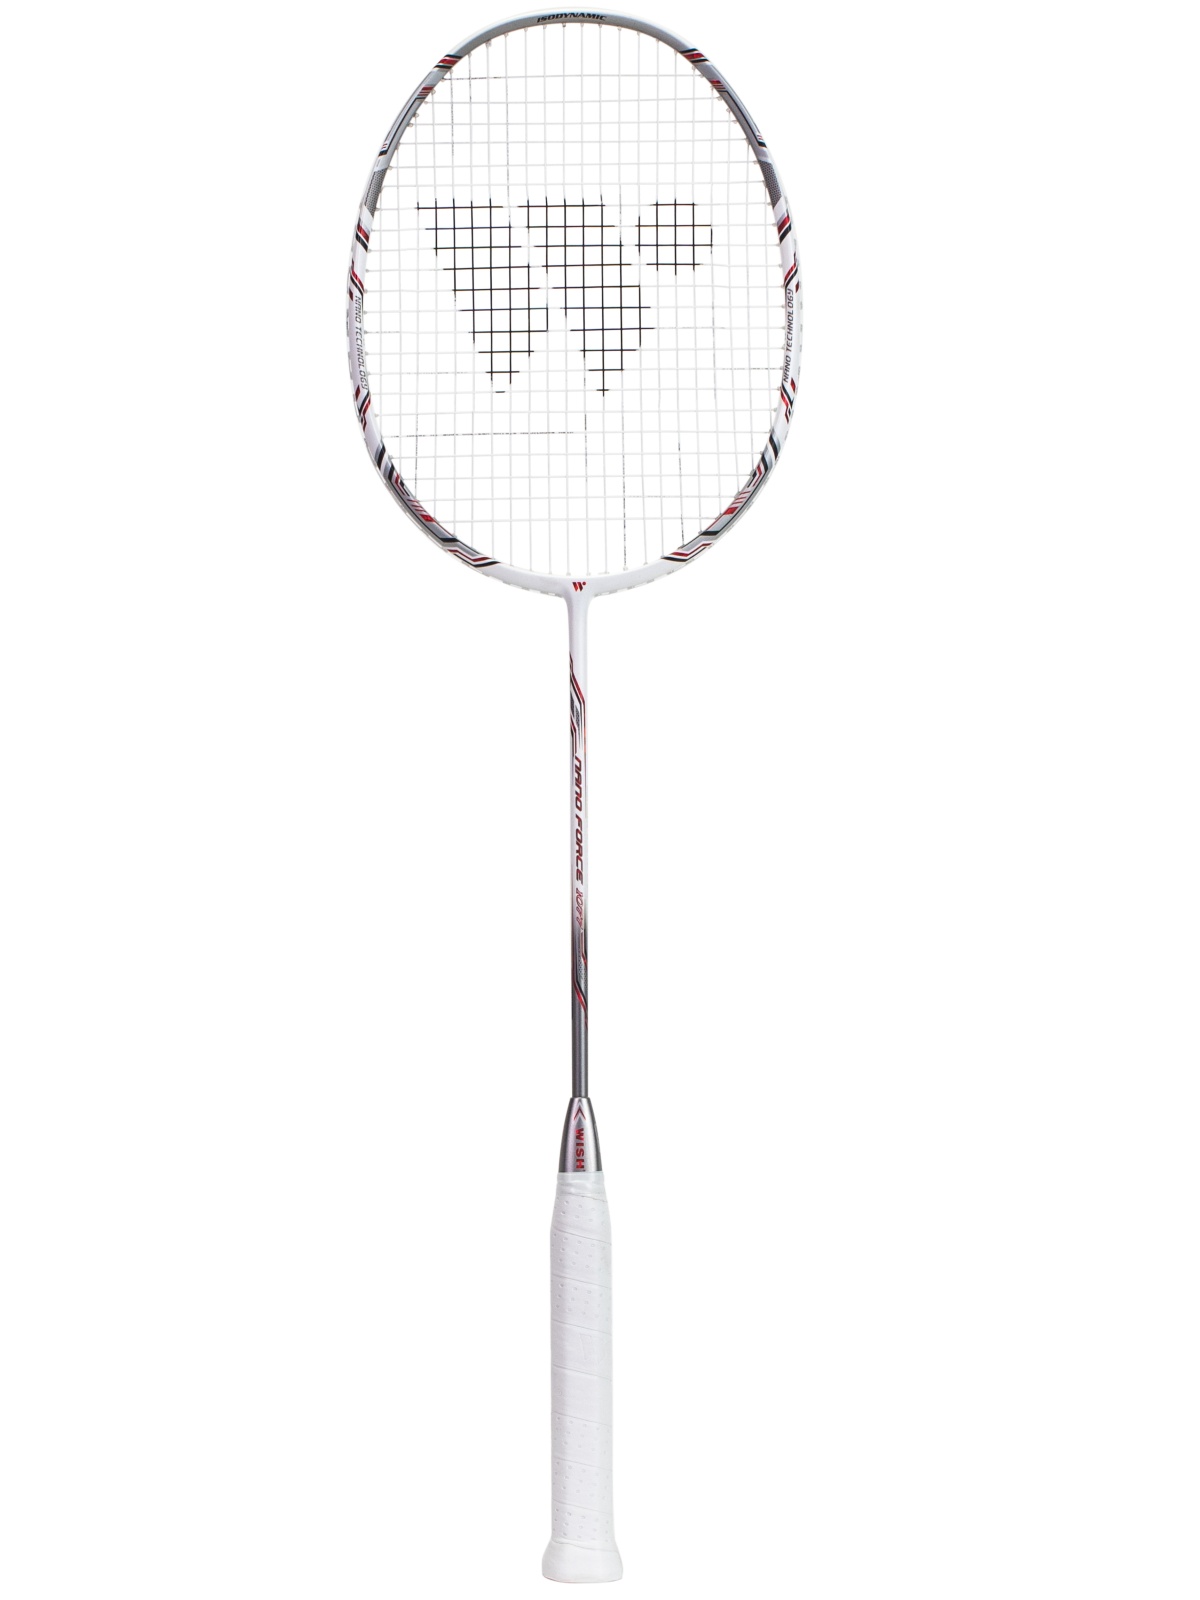 Badmintonová raketa WISH Nano Force 1077